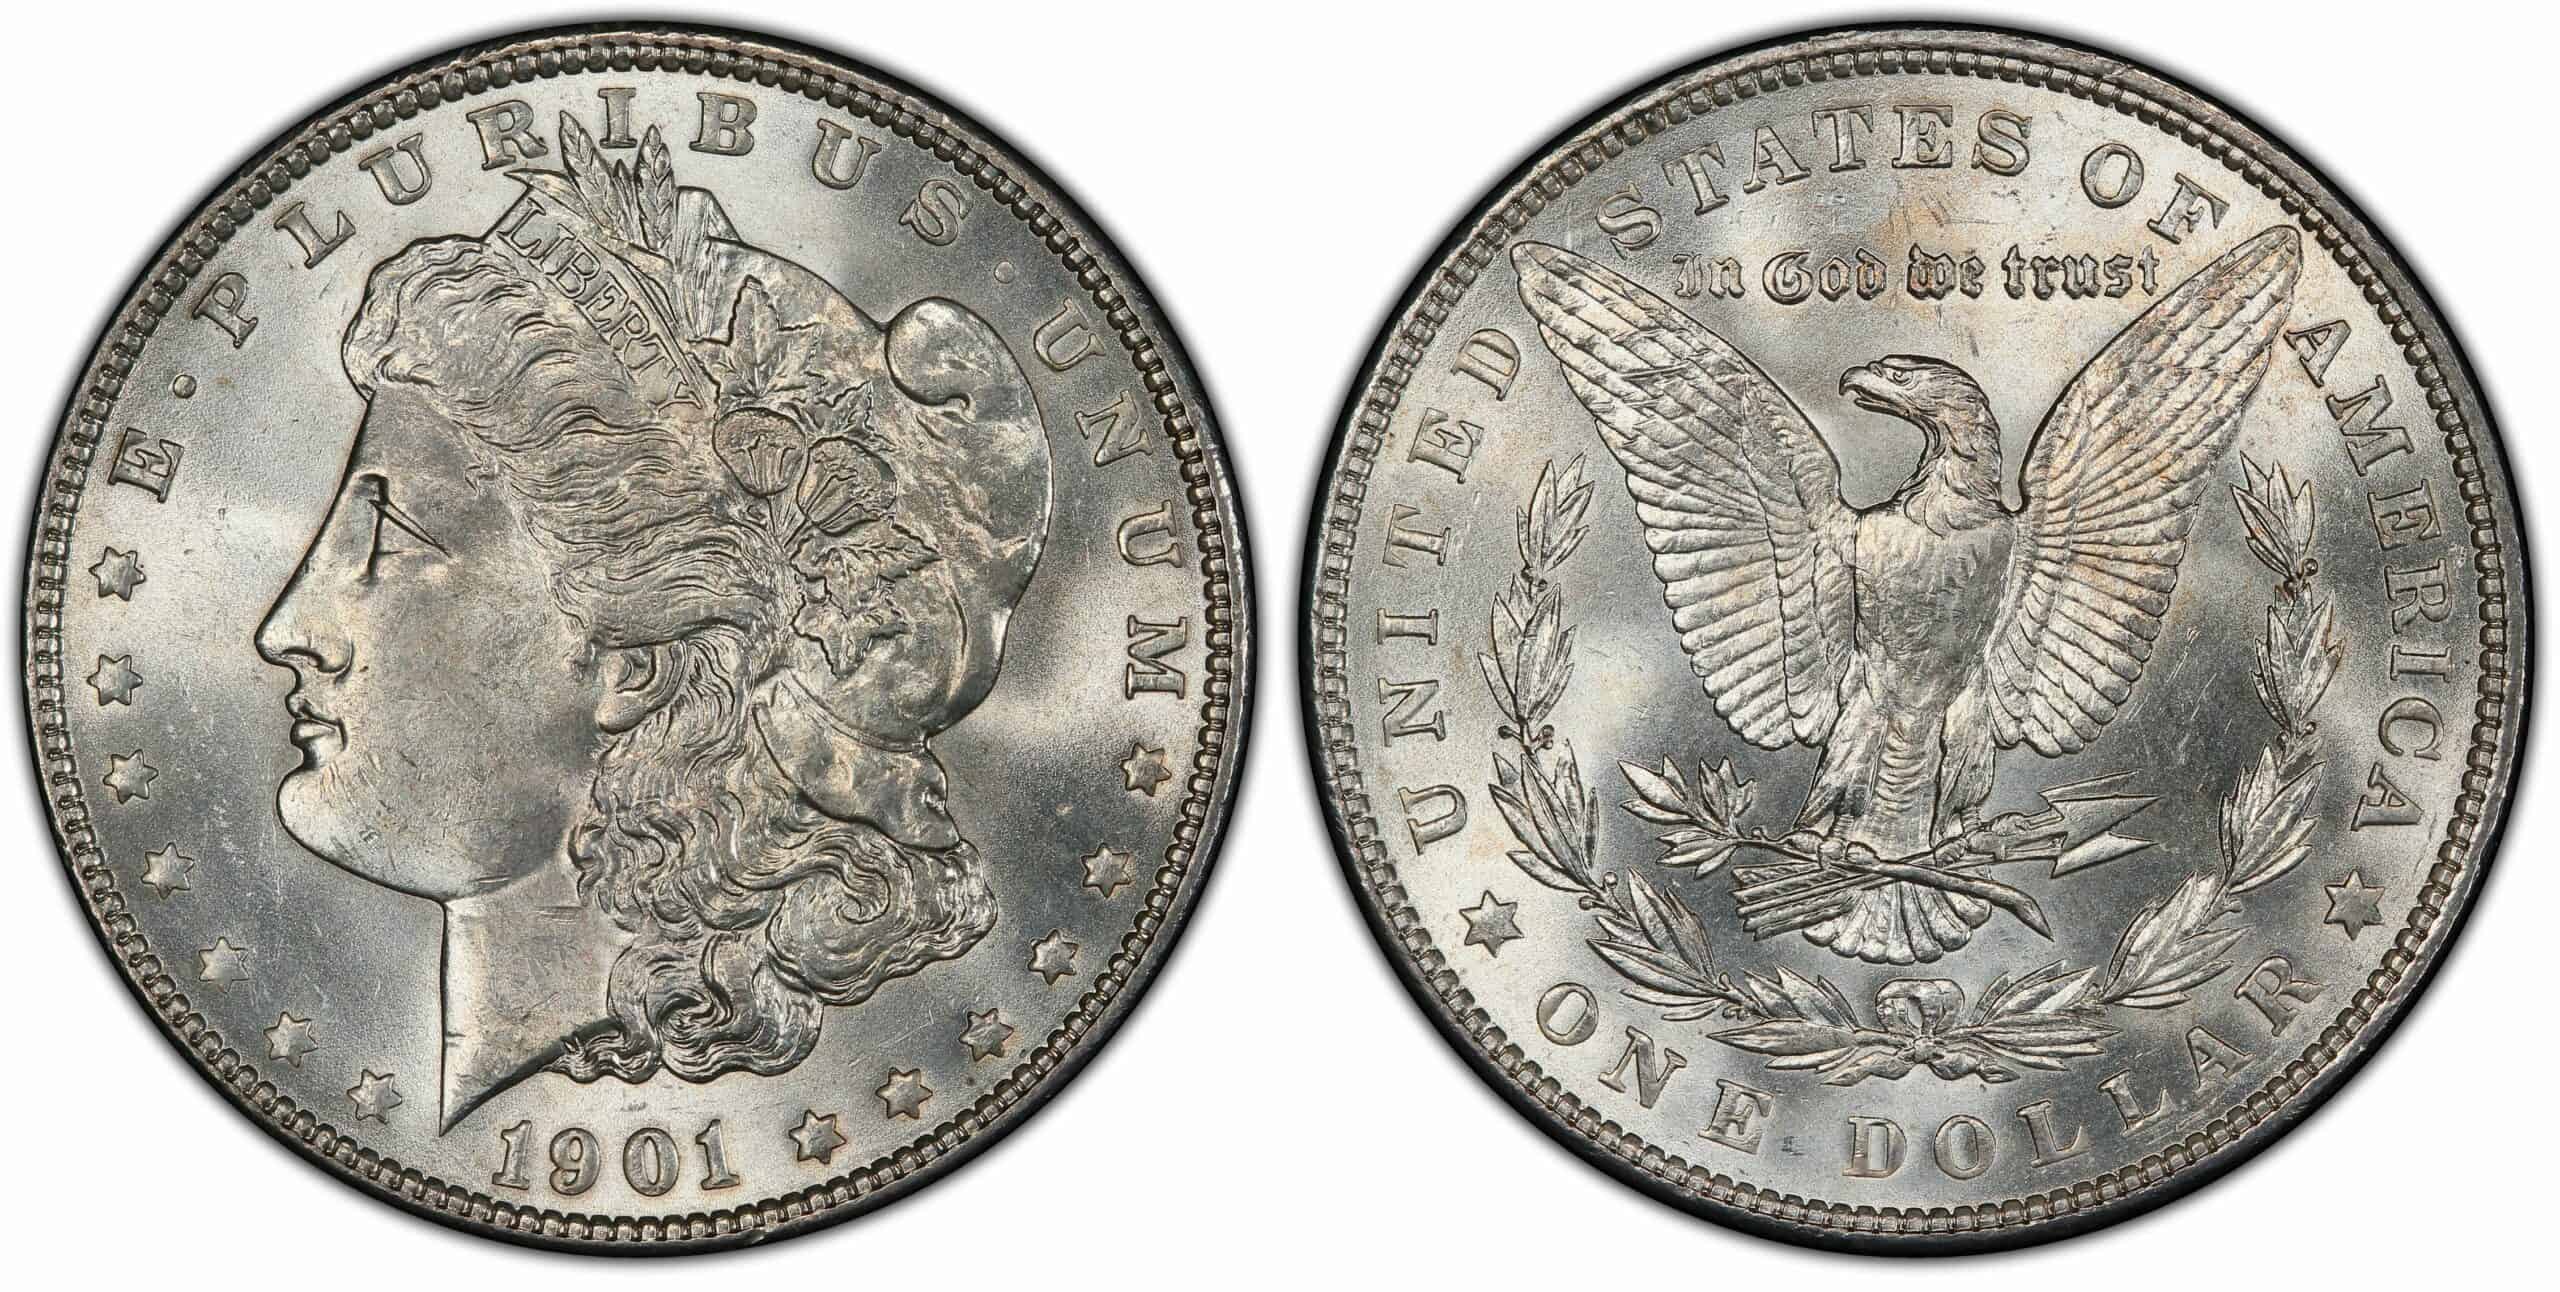 1901 Silver Dollar Details